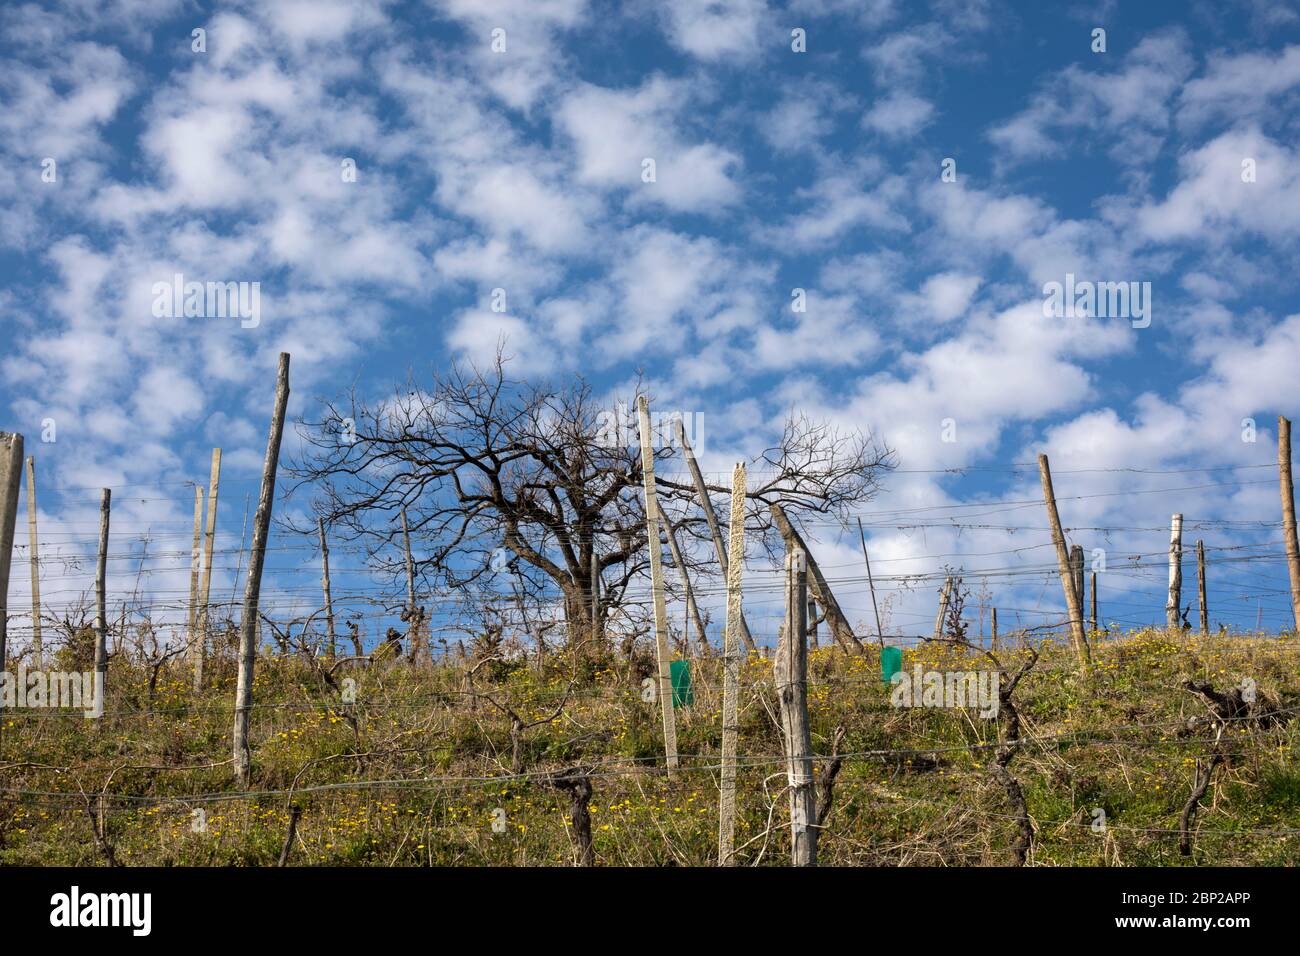 Mackerel sky with vineyards, Langhe, Piedmont, Italy Stock Photo